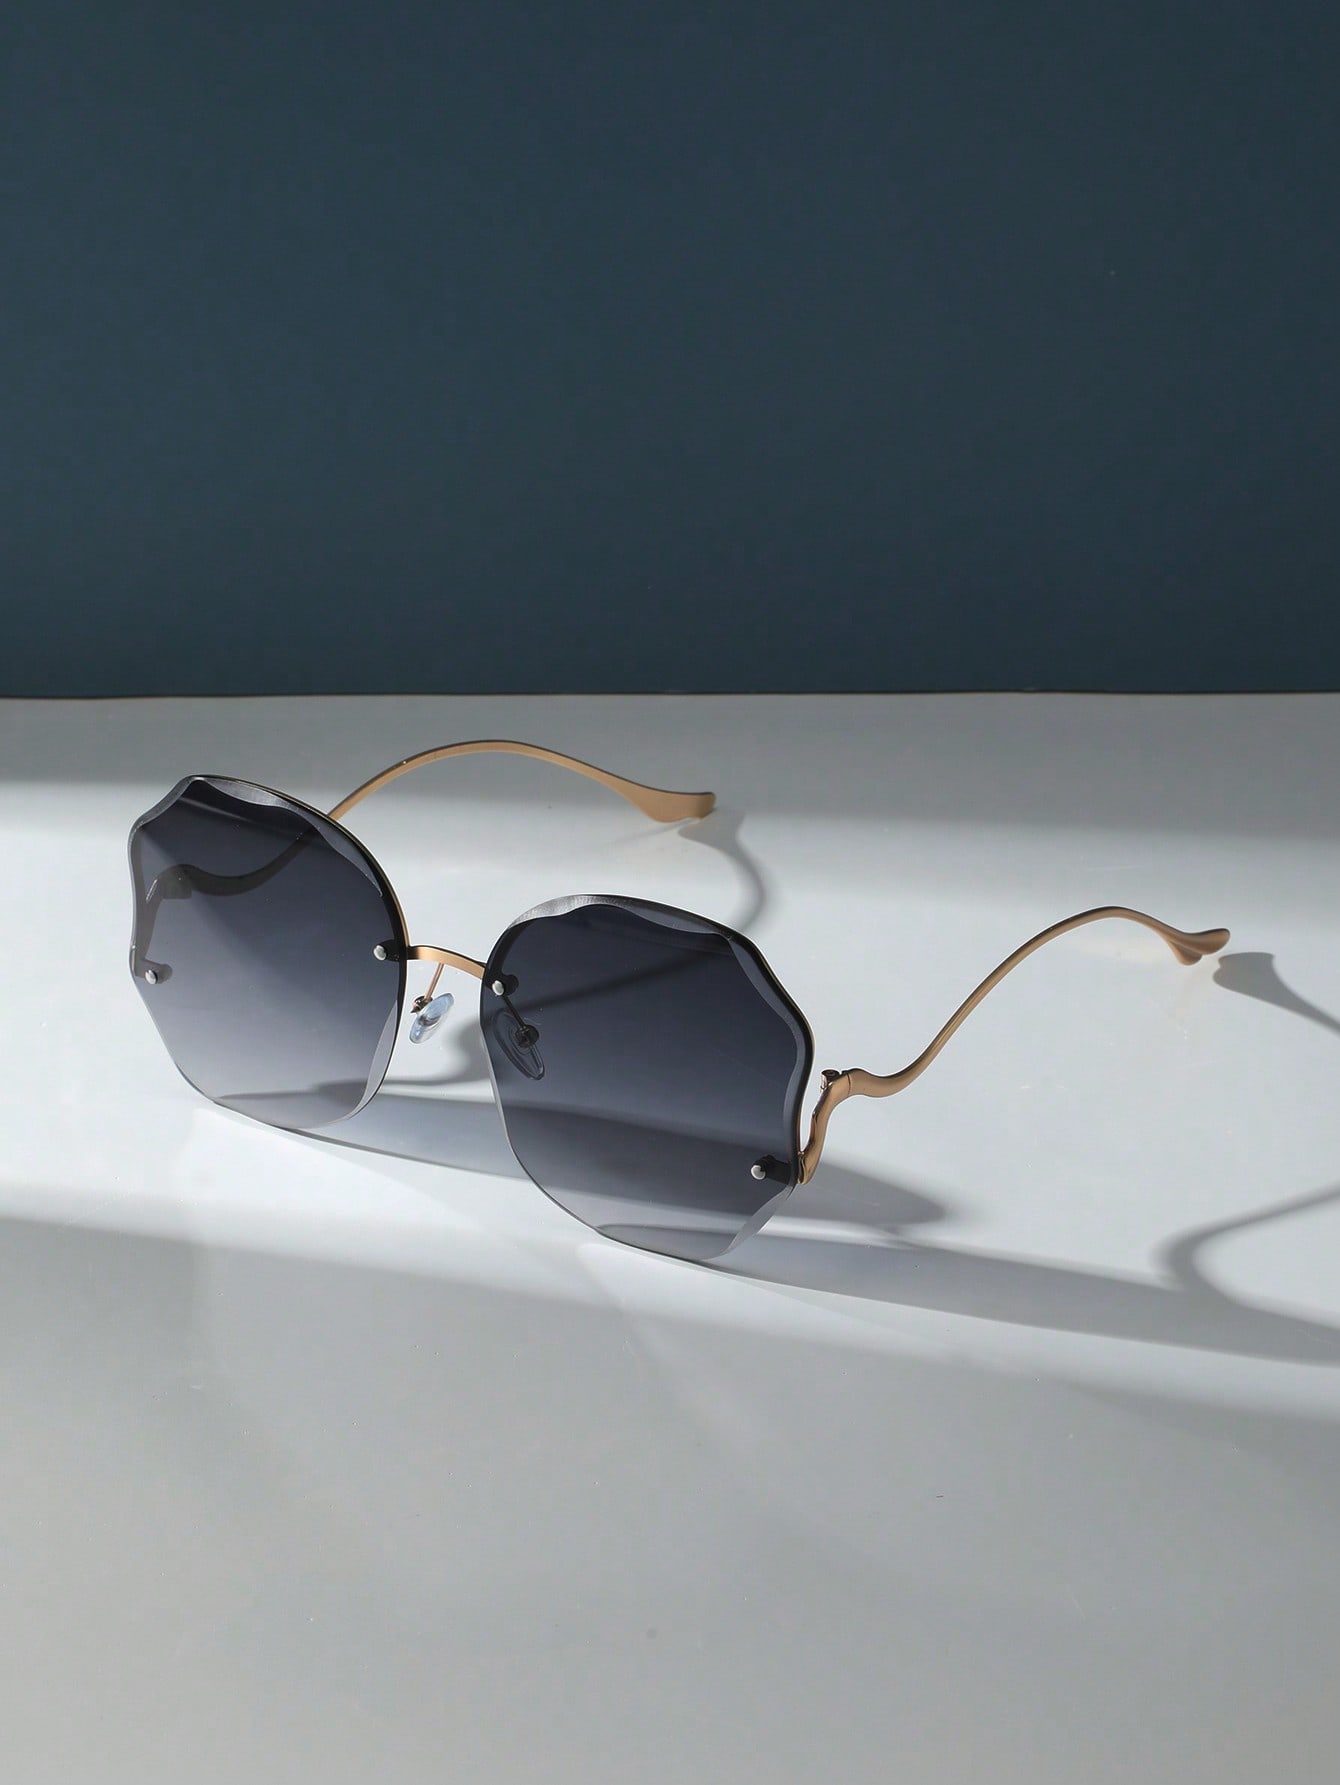 1 pair Rimless Fashion Sunglasses